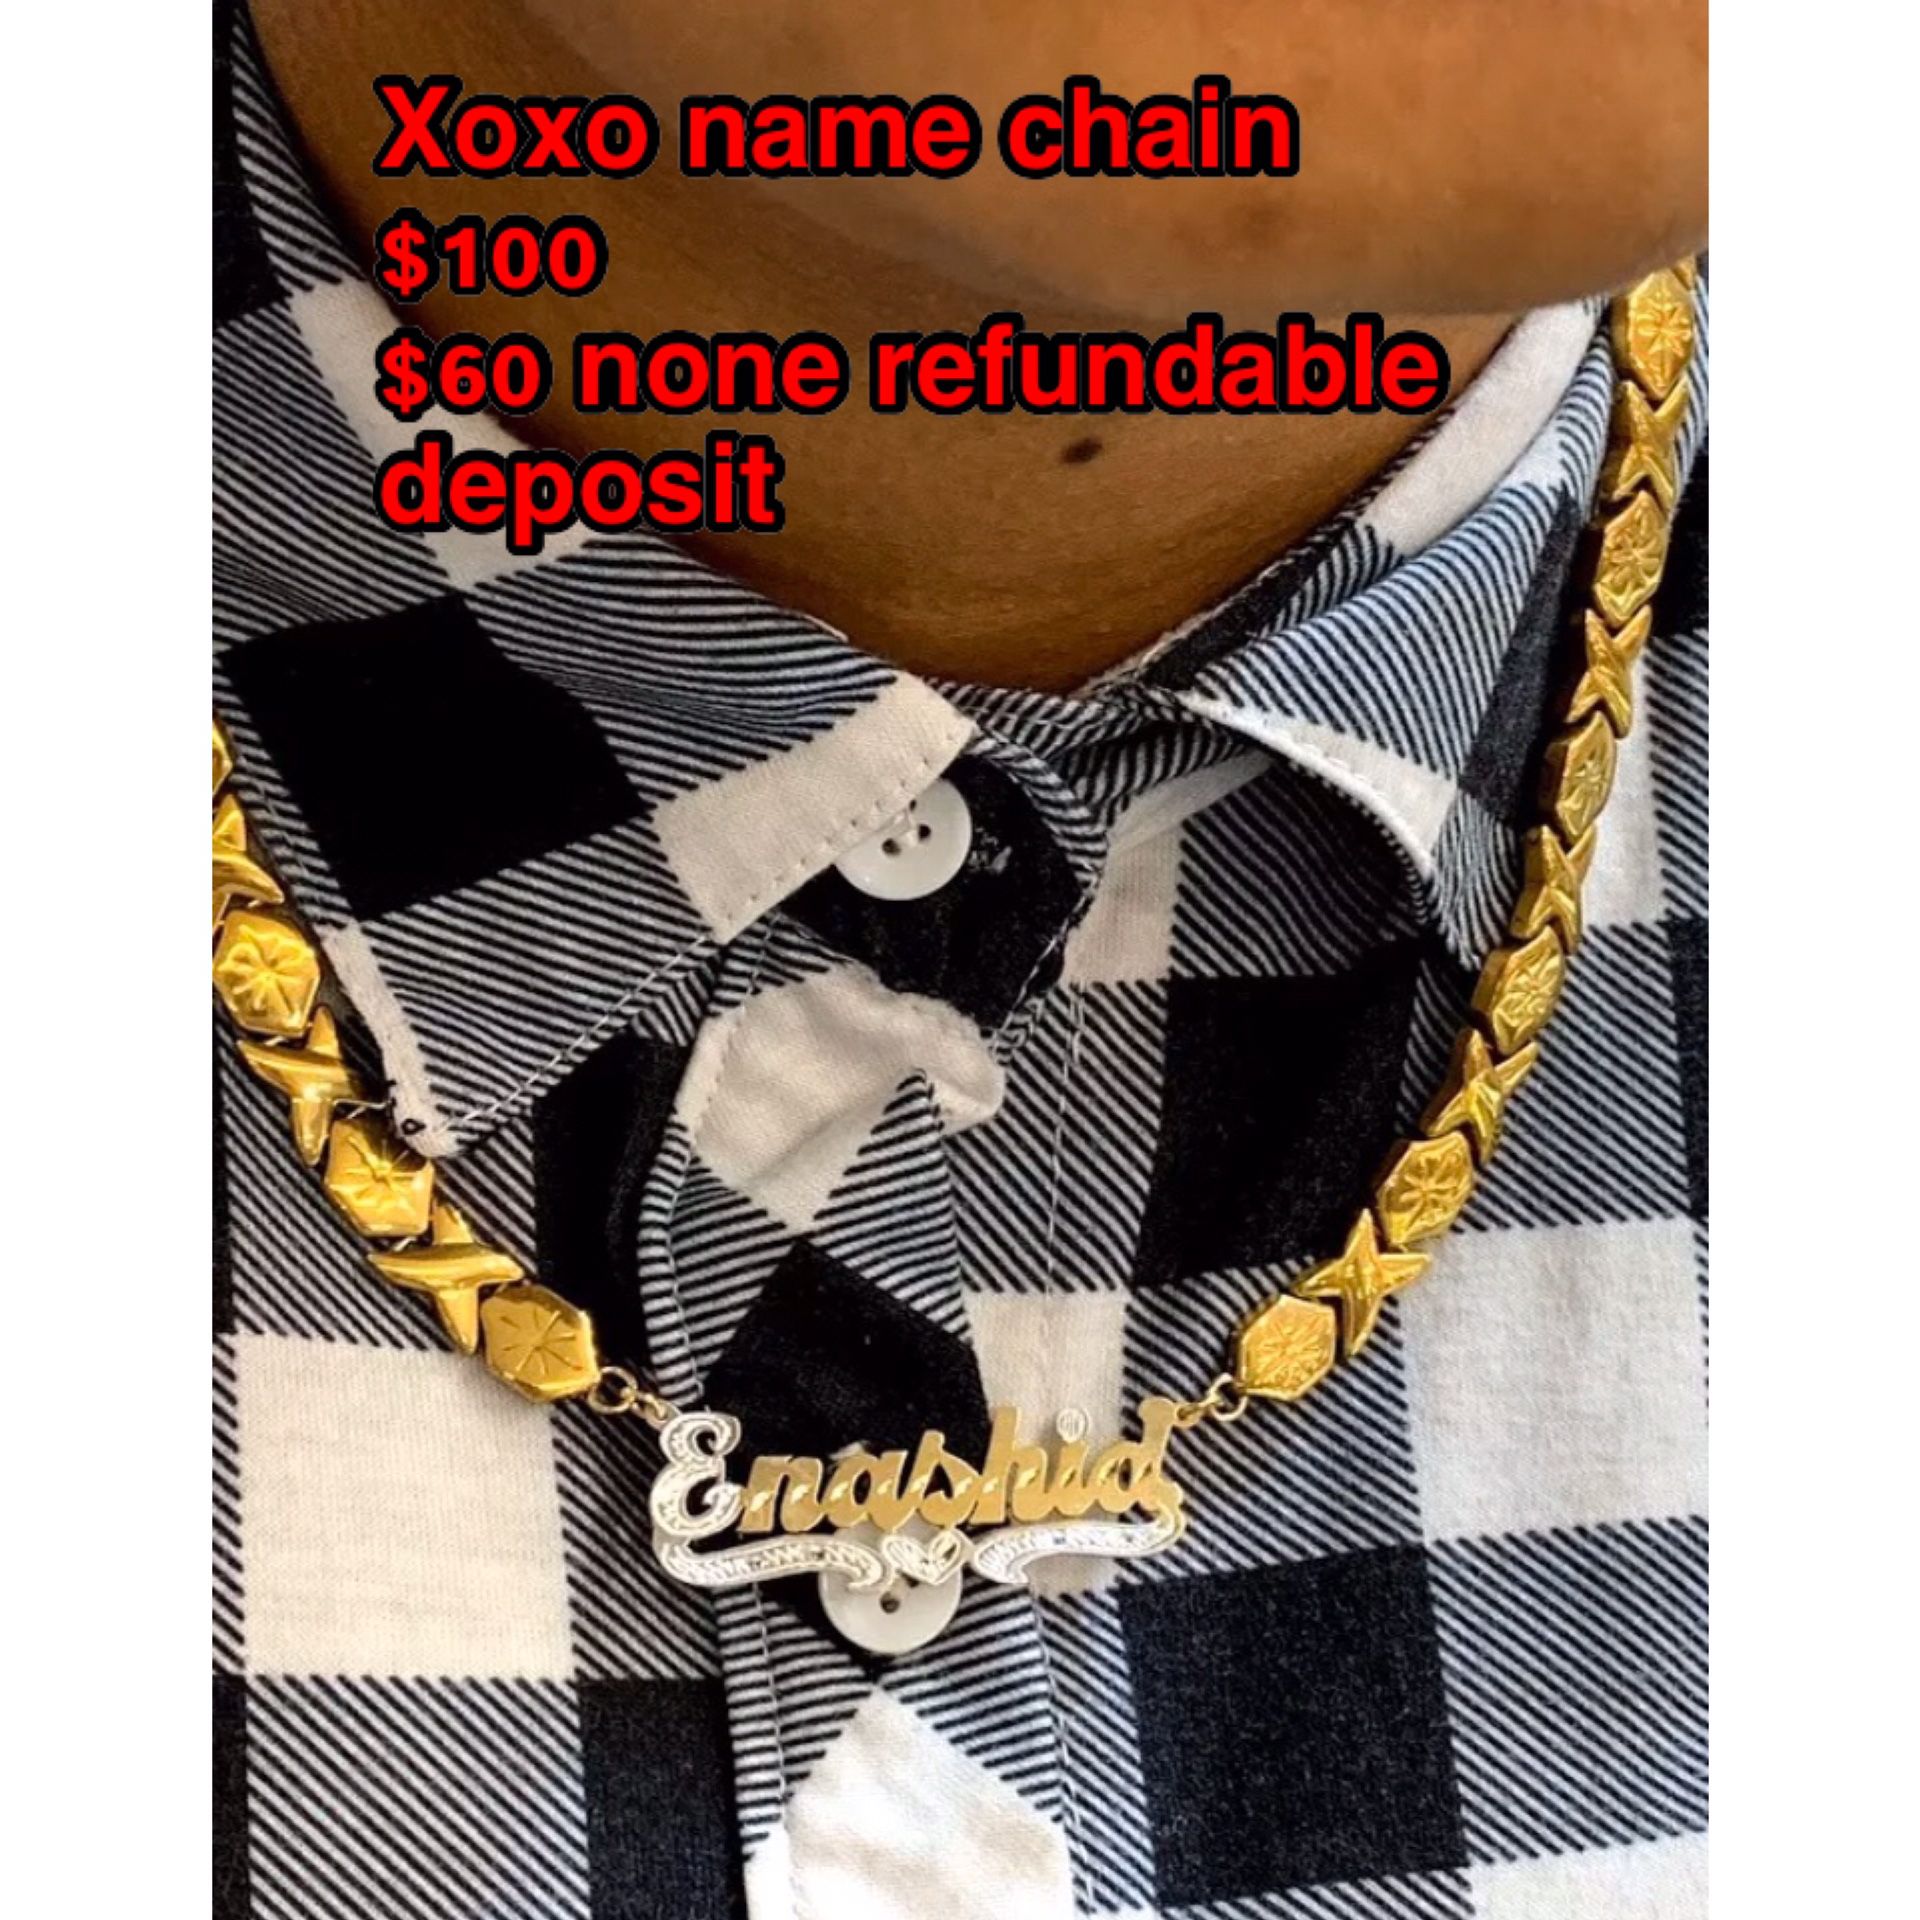 Name chain